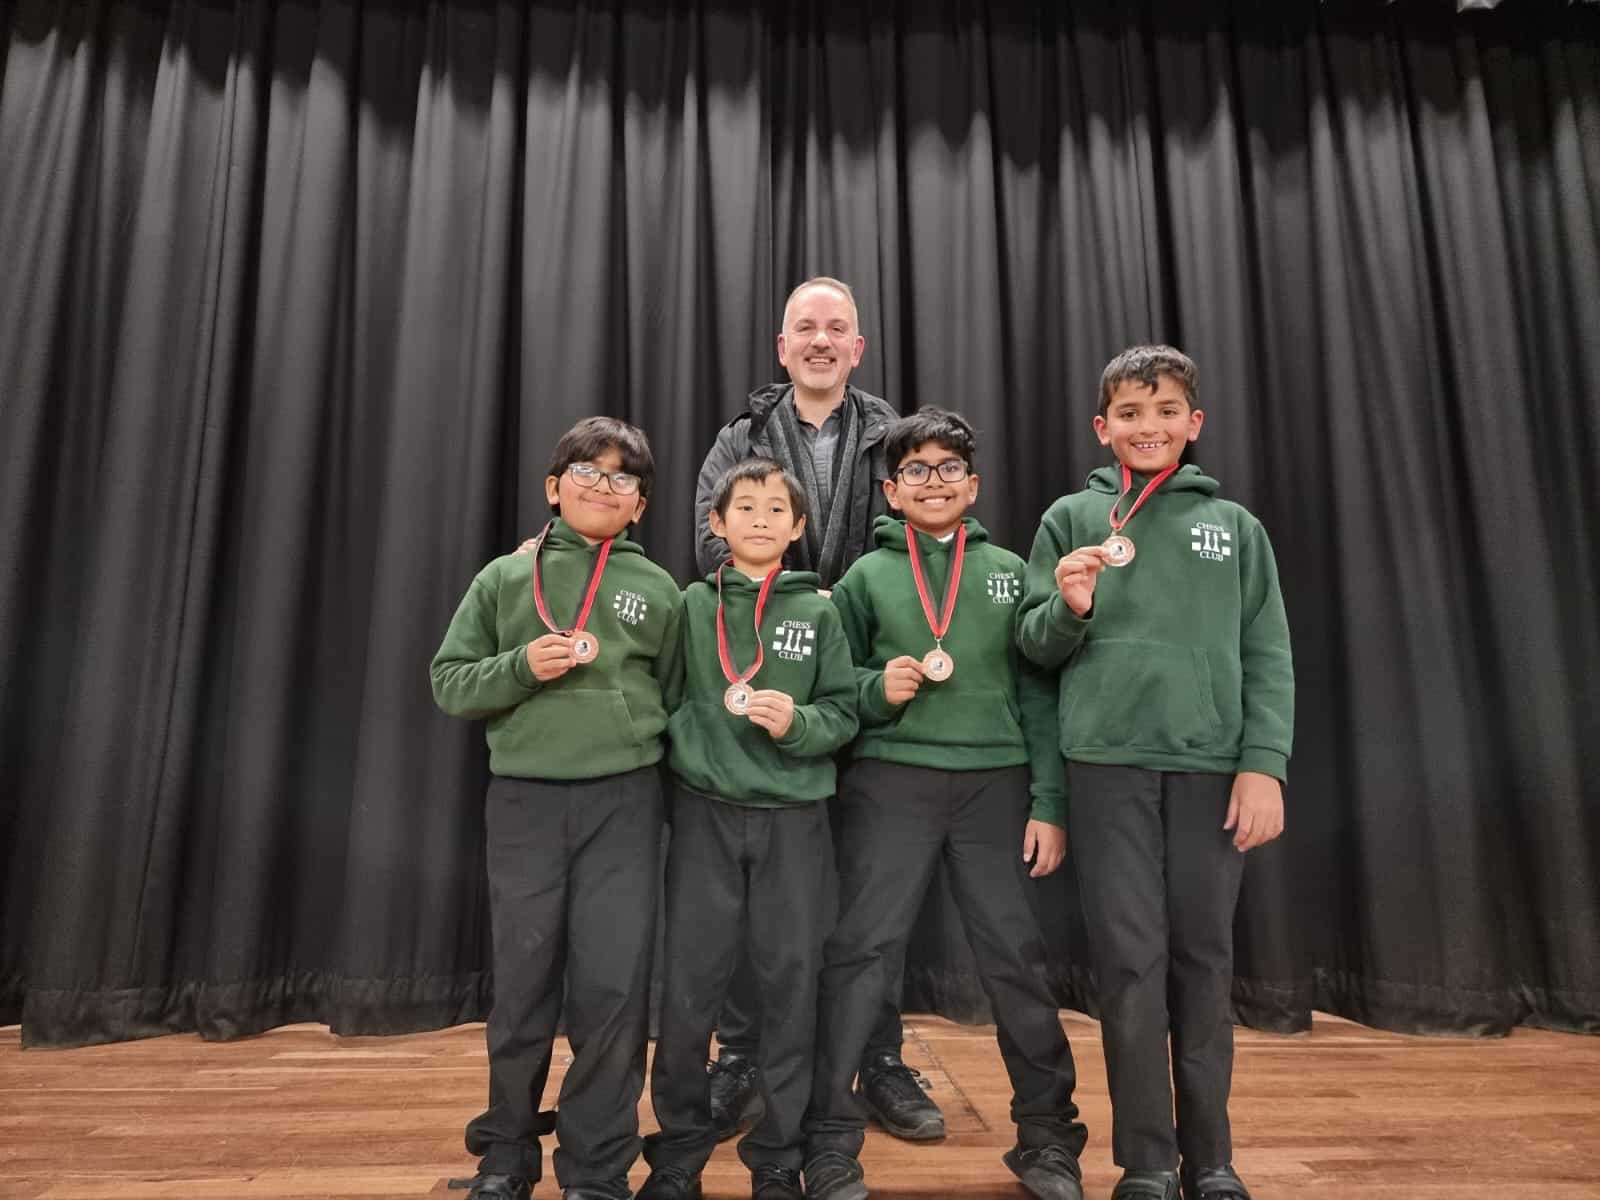 Birmingham and District Junior Chess League – Event 2